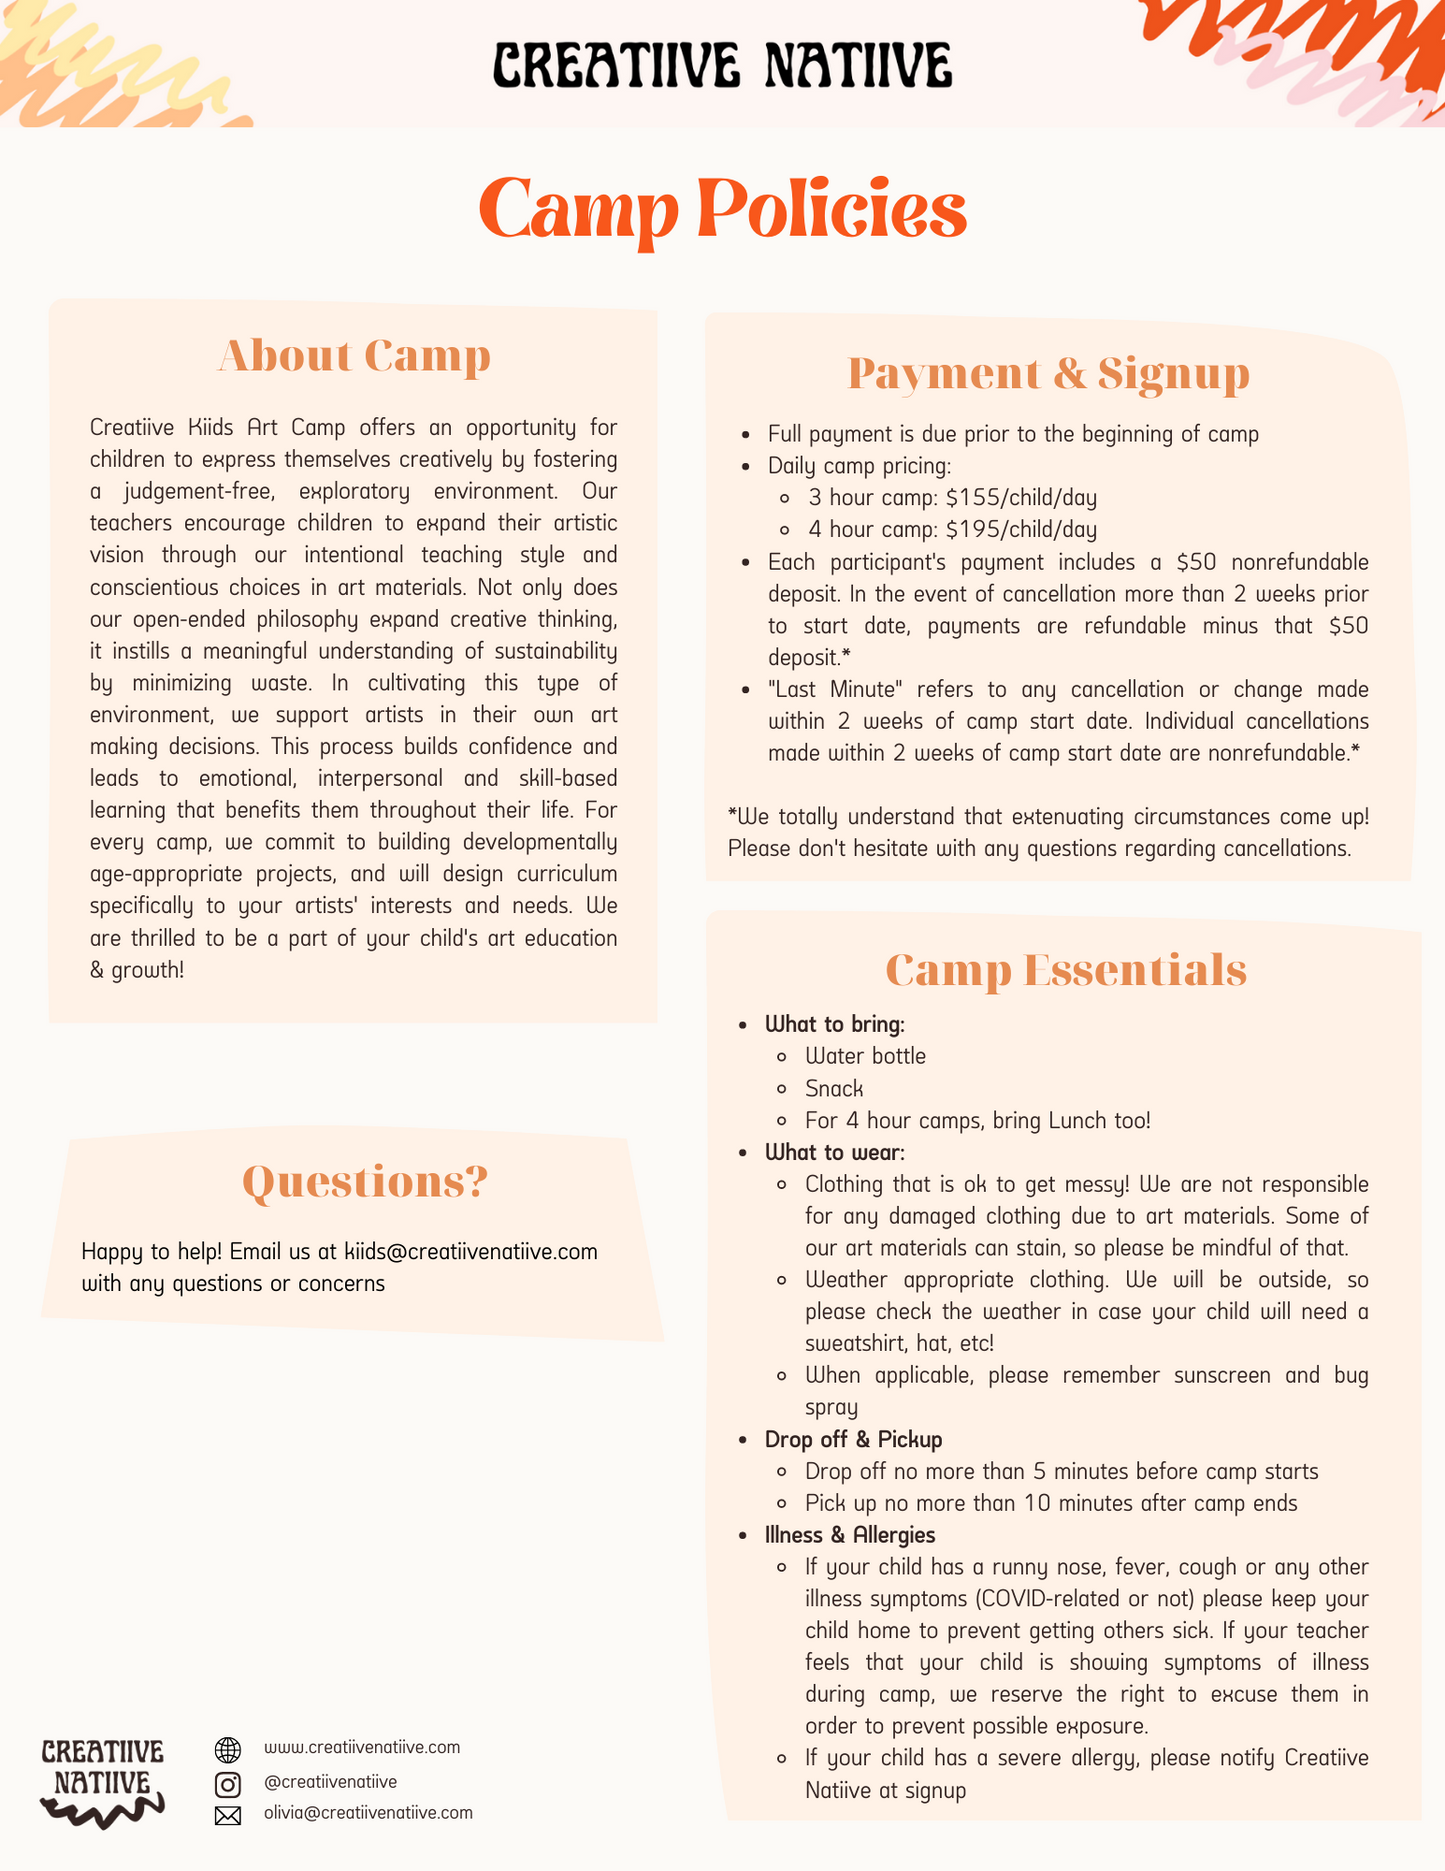 Samson Camp | Aug 26-30